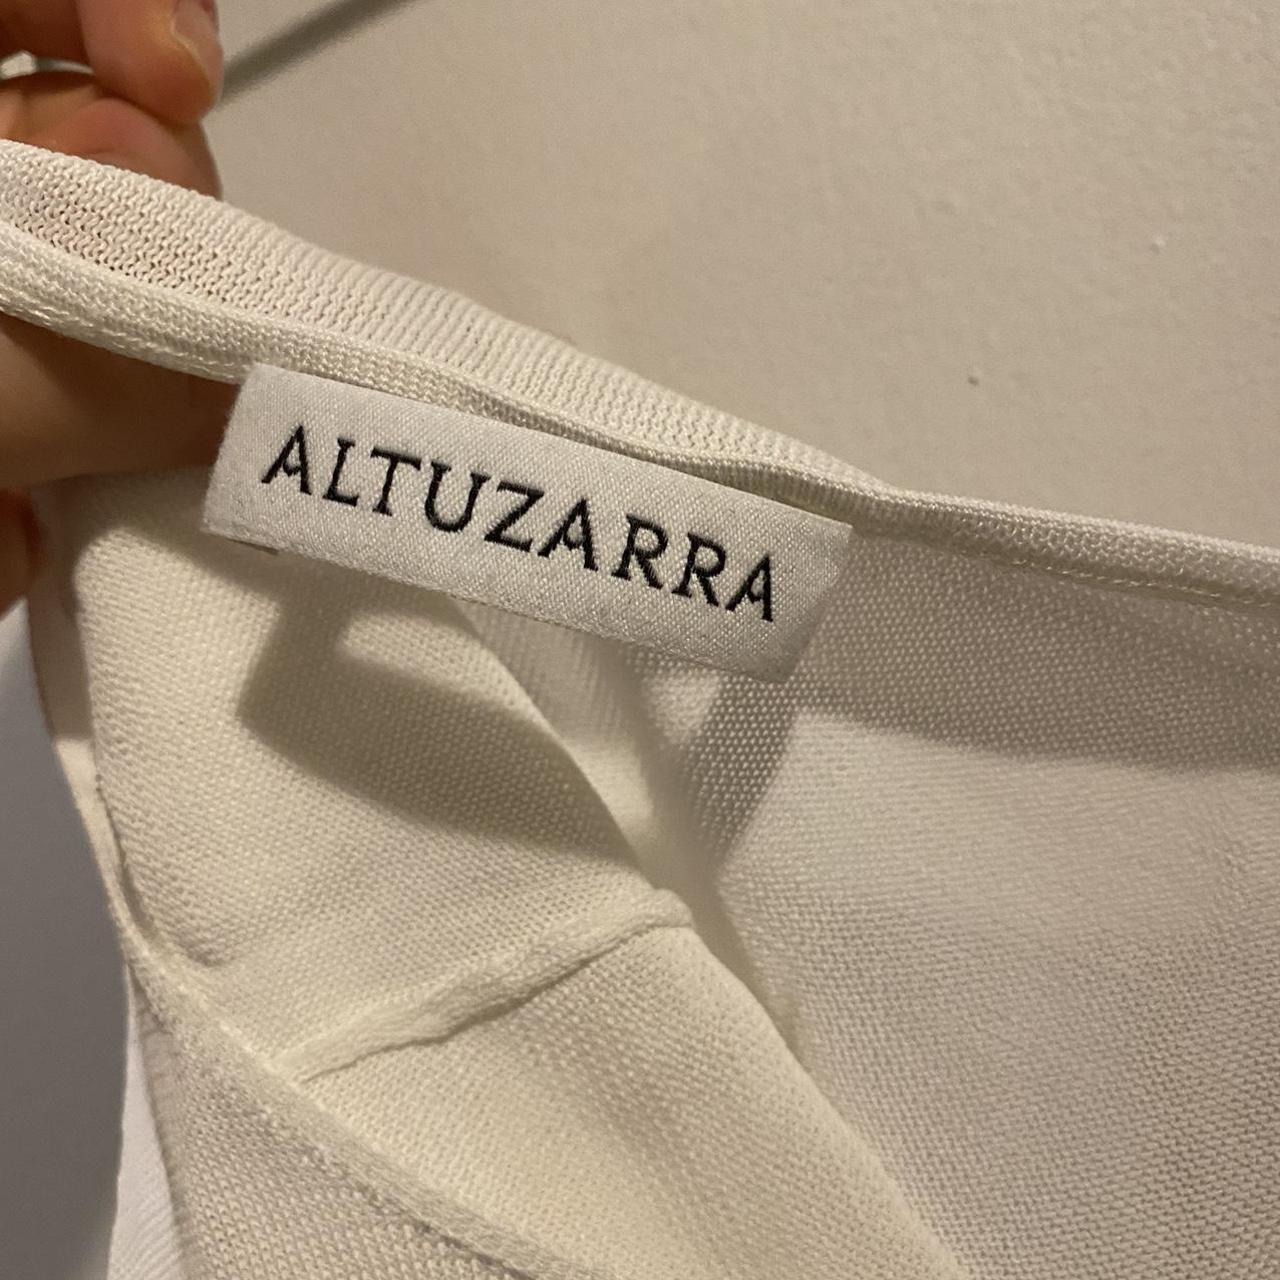 Altuzarra Women's White and Cream Dress